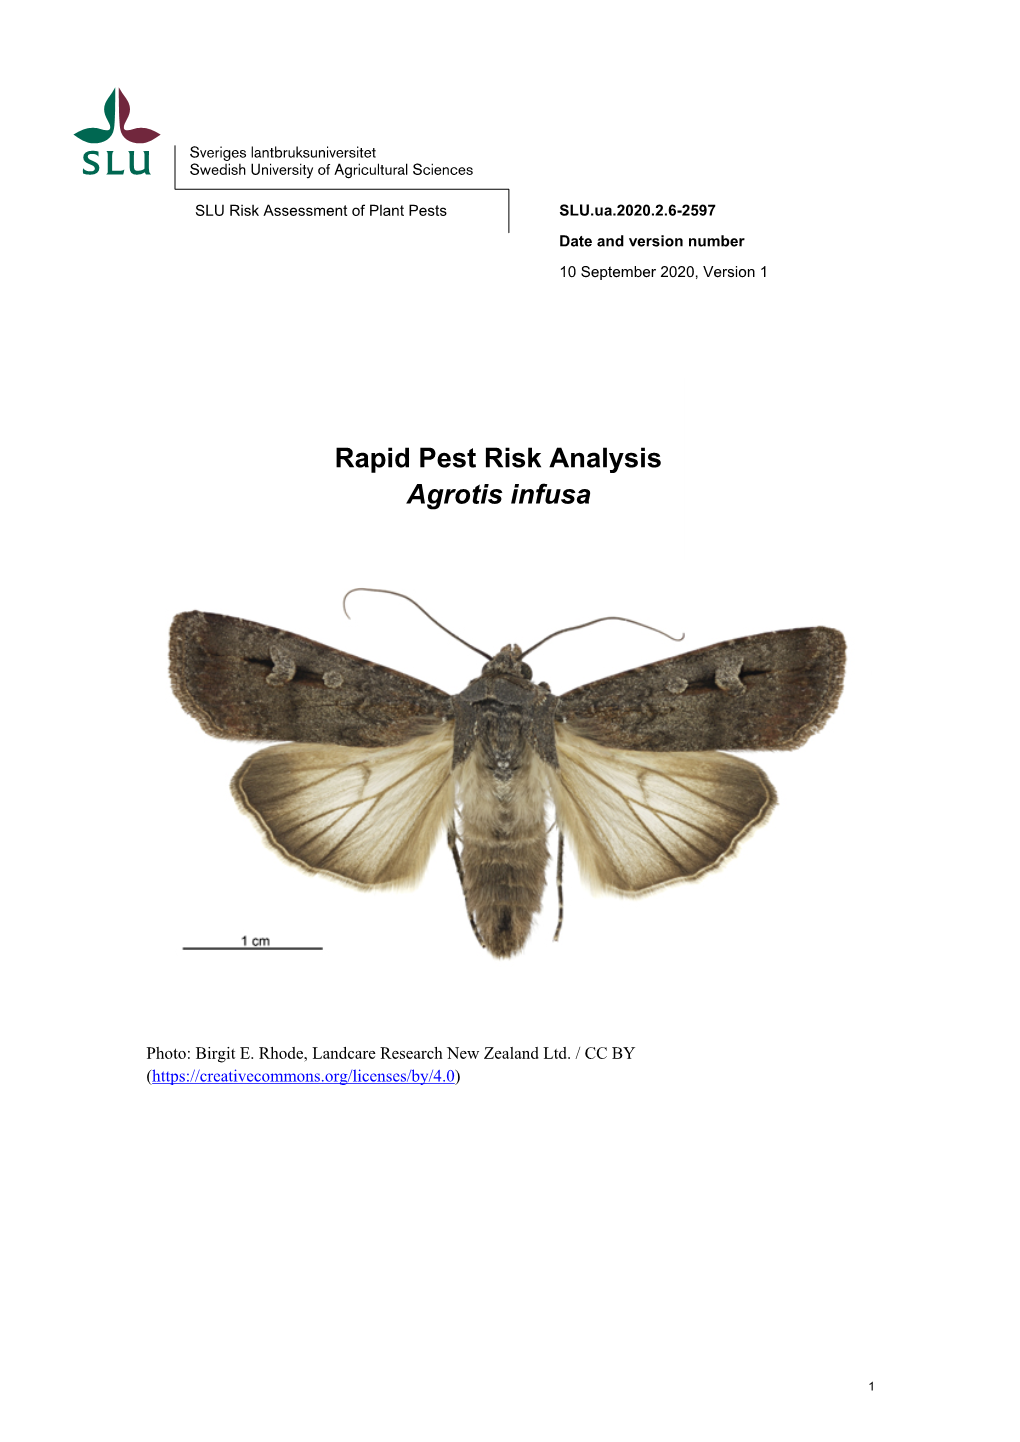 Rapid Pest Risk Analysis Agrotis Infusa Rapid Pest Risk Analysis